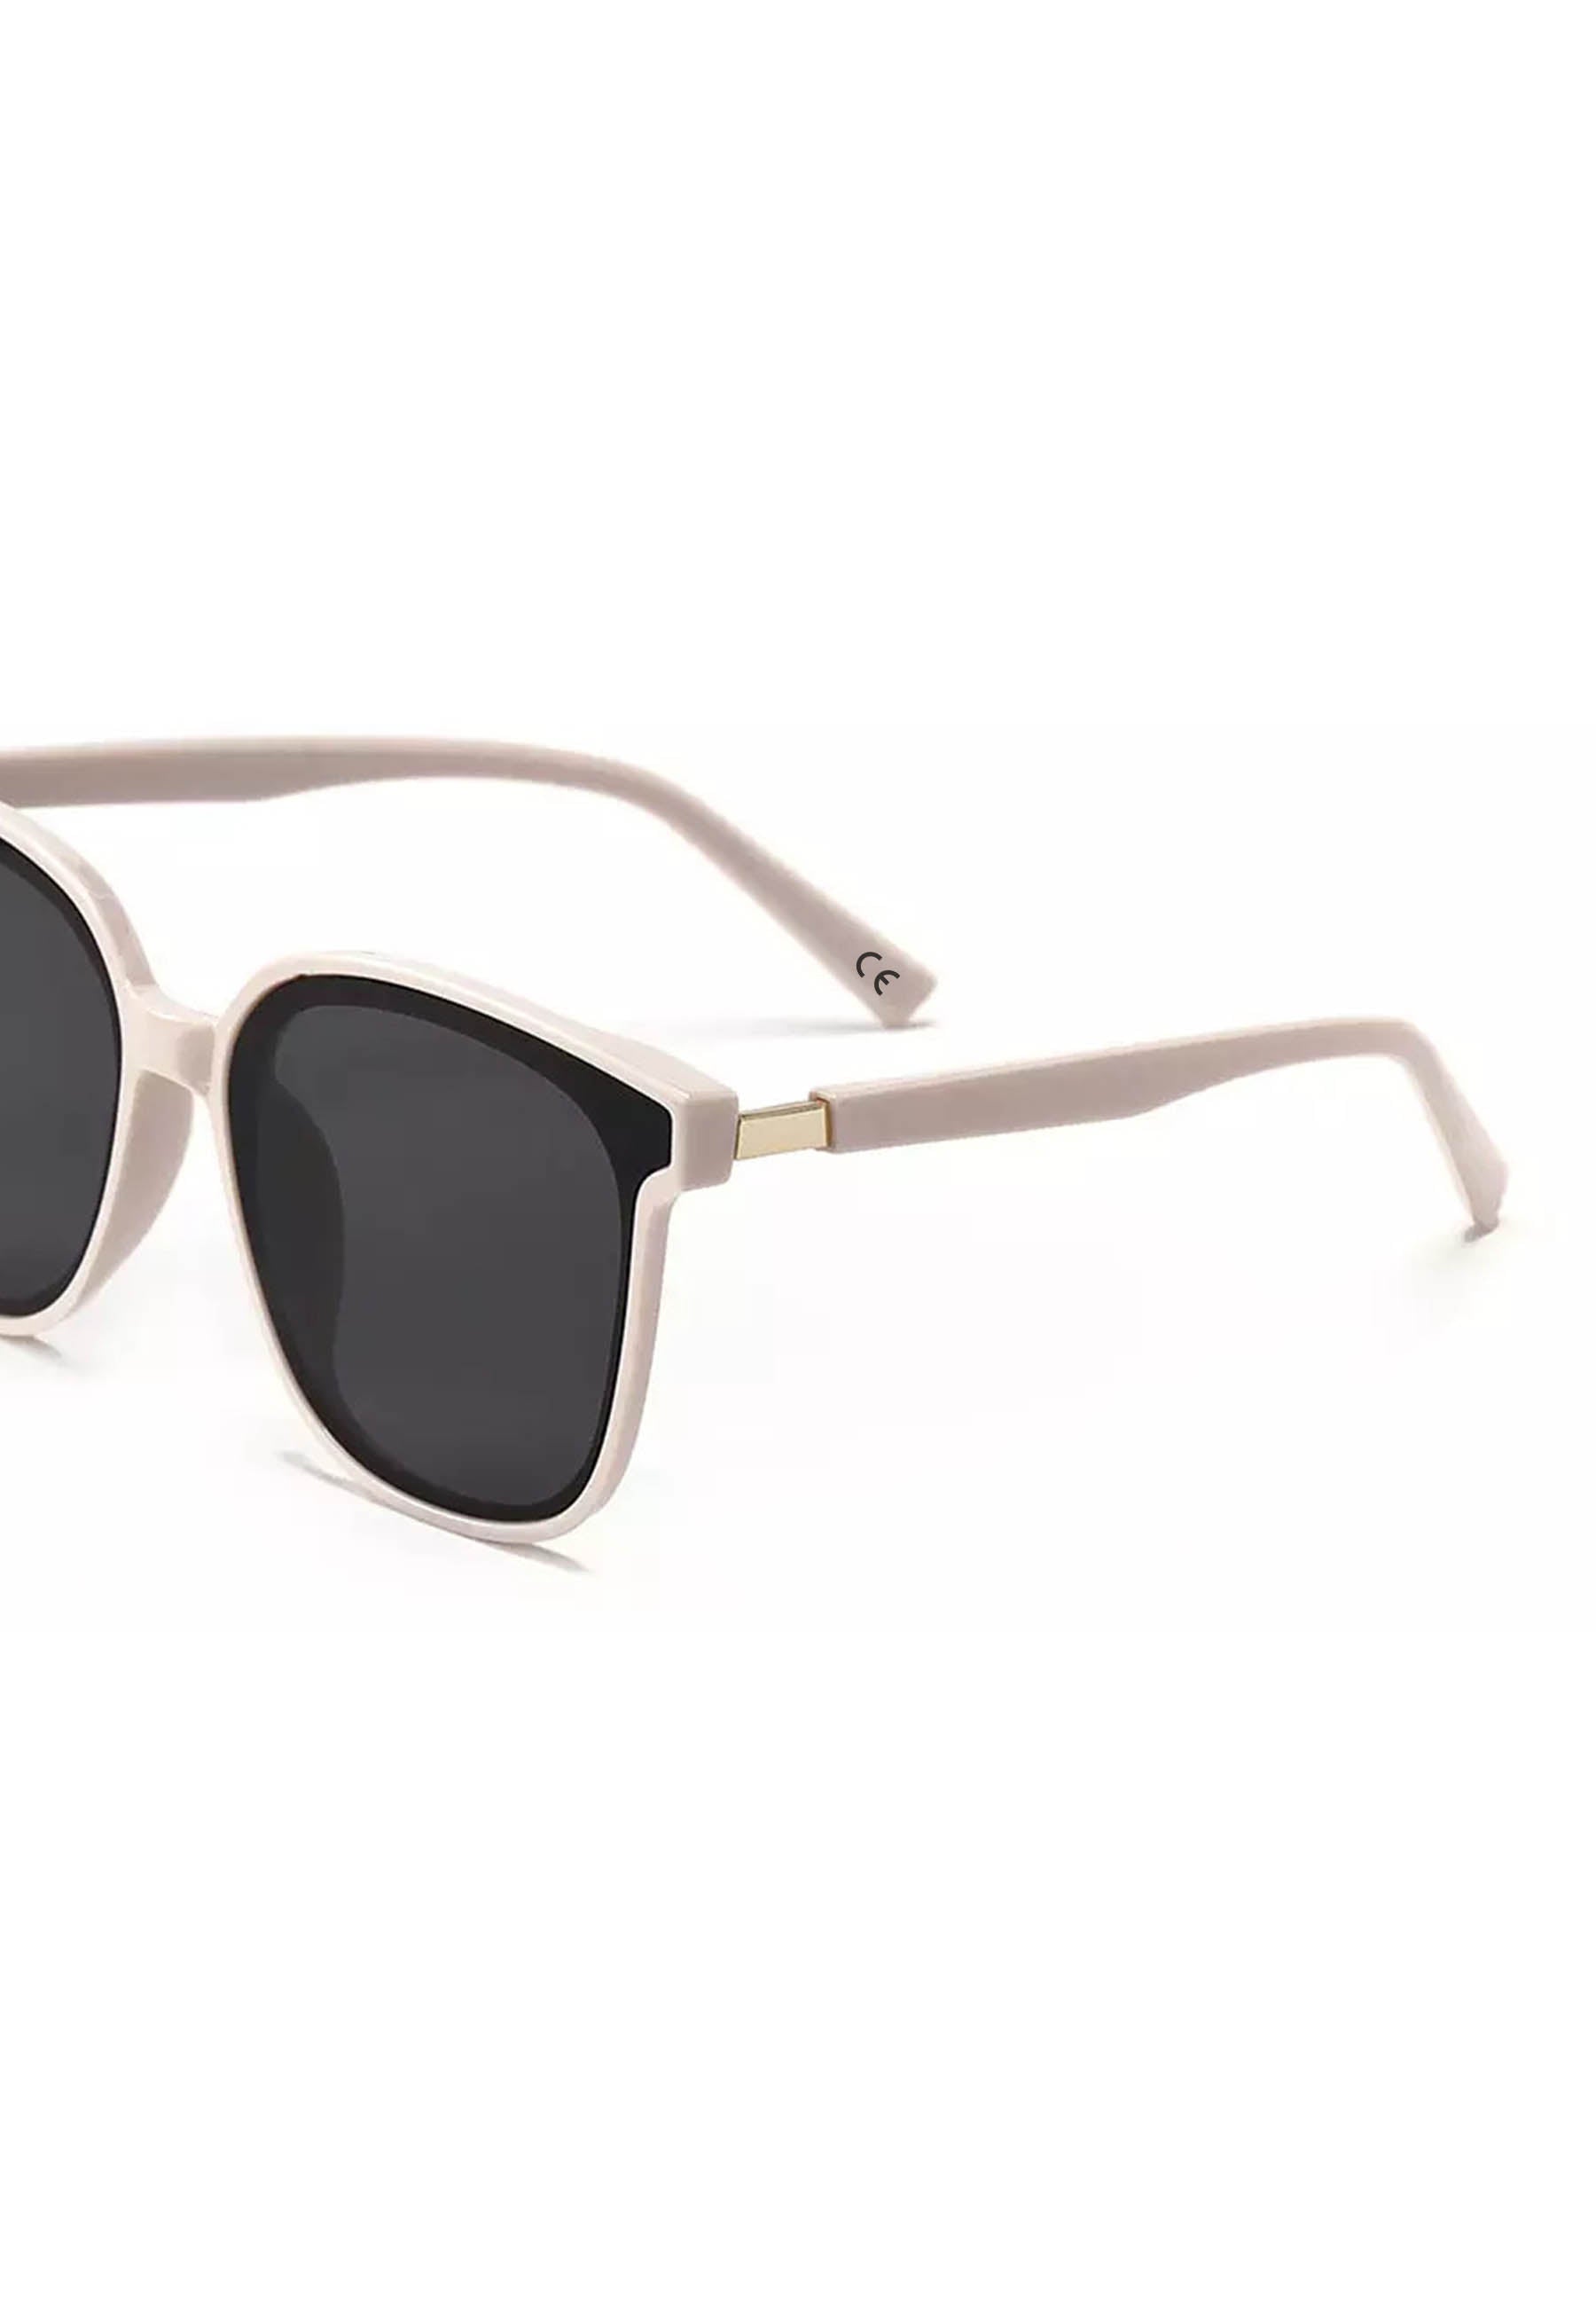 Avant-Garde Paris Cateye Sunglasses